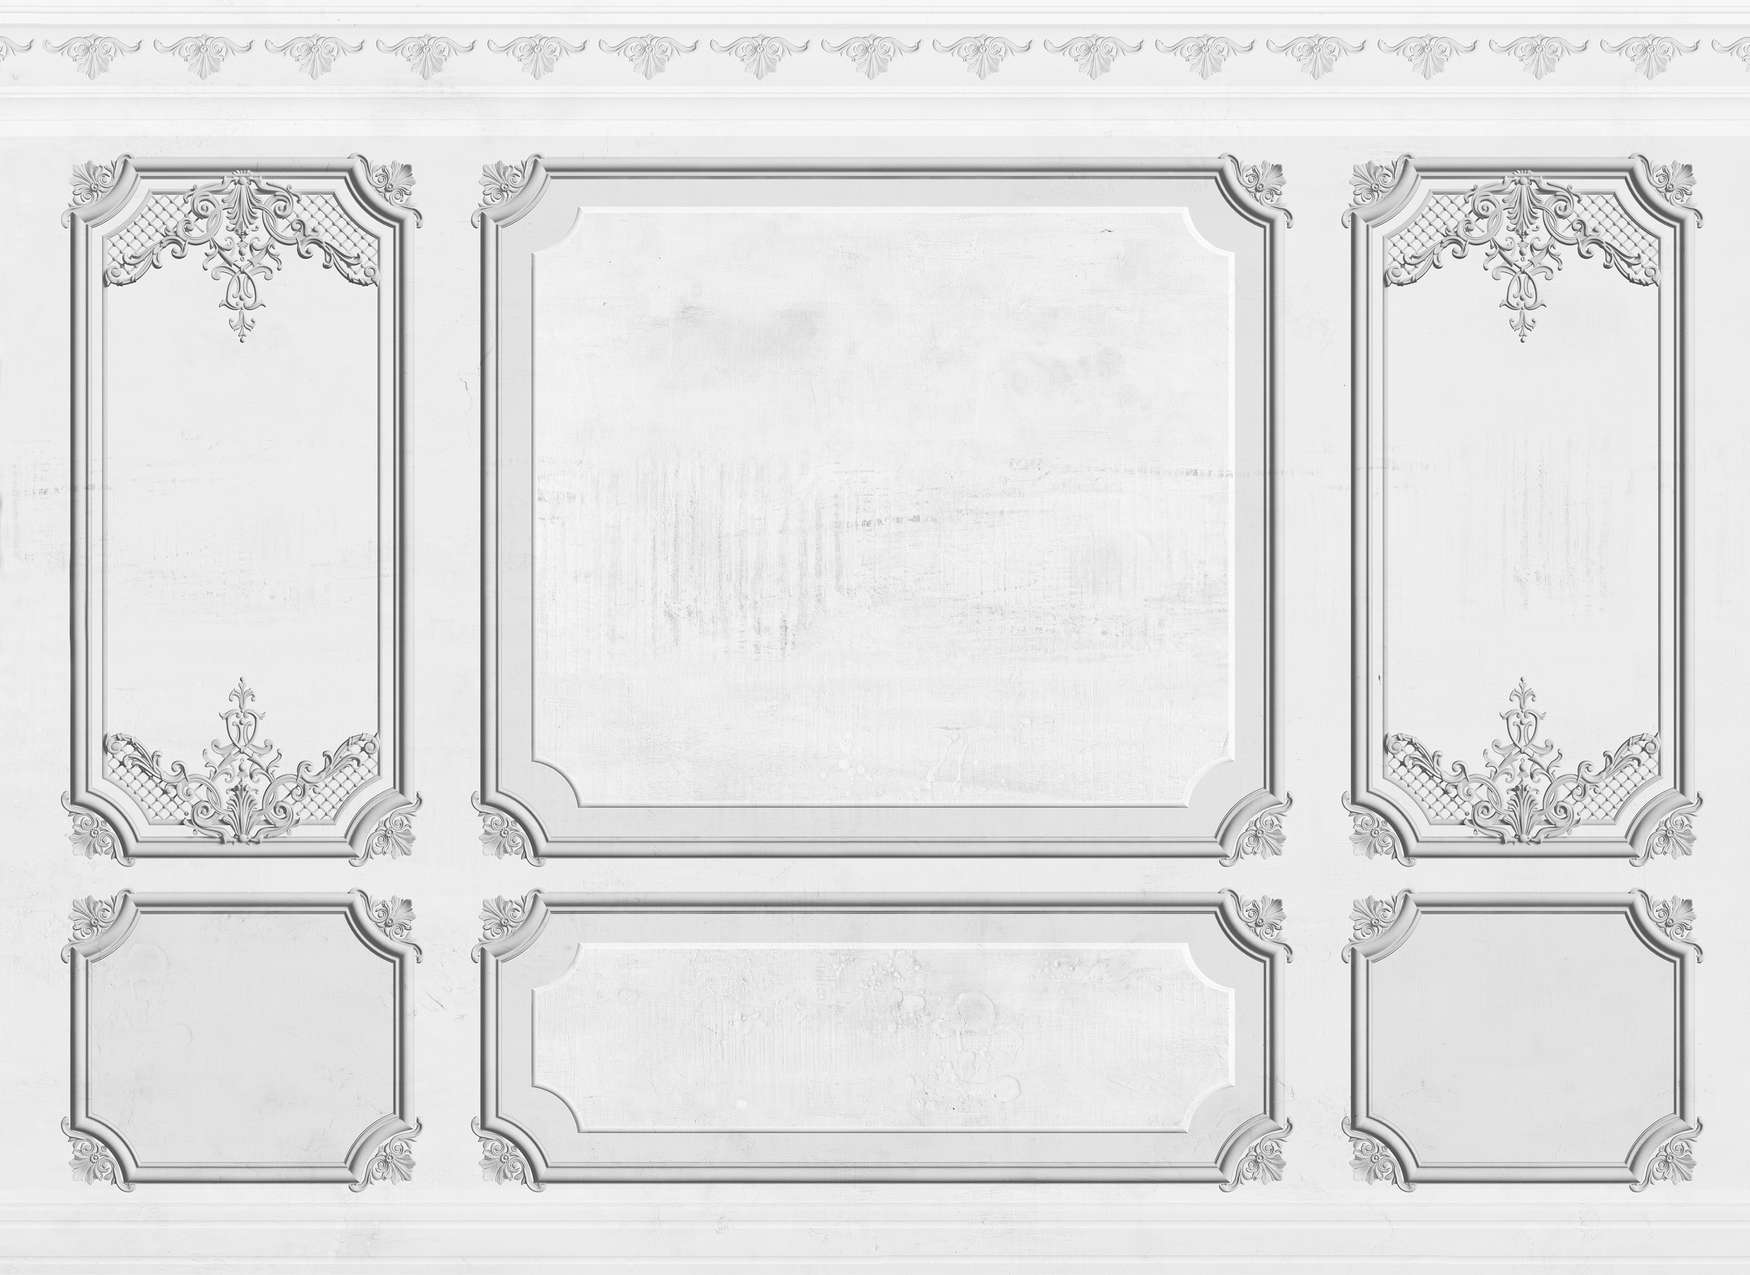             Digital behang klassieke muur reliëf in stucco frame look - Grijs
        